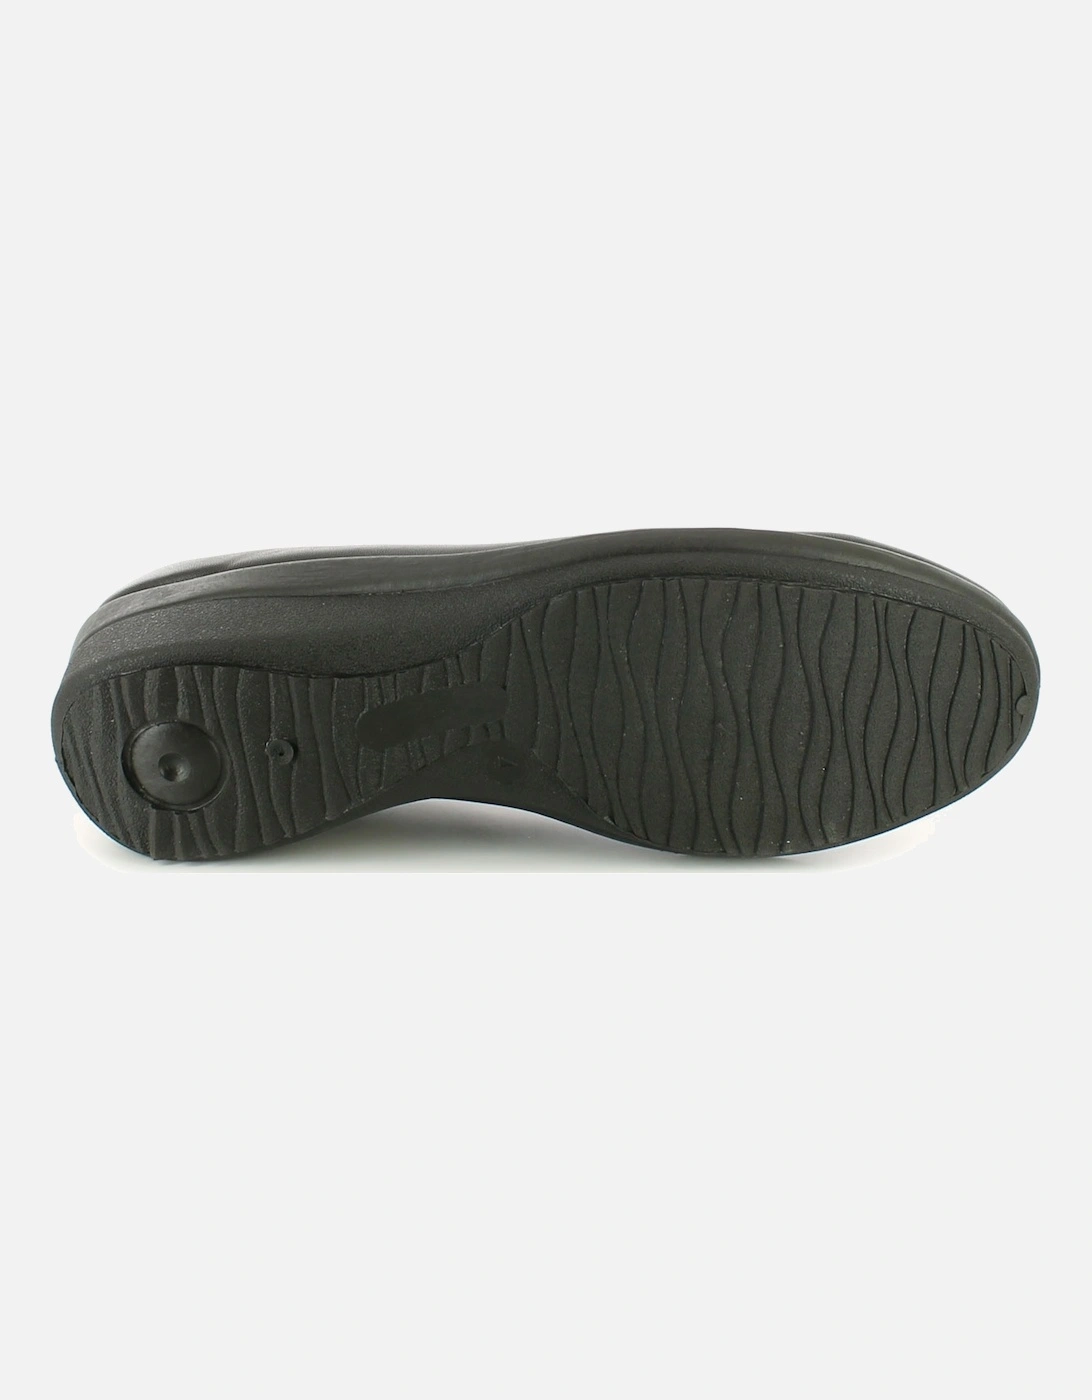 Womens Shoes Flat Reach2 Slip On black UK Size